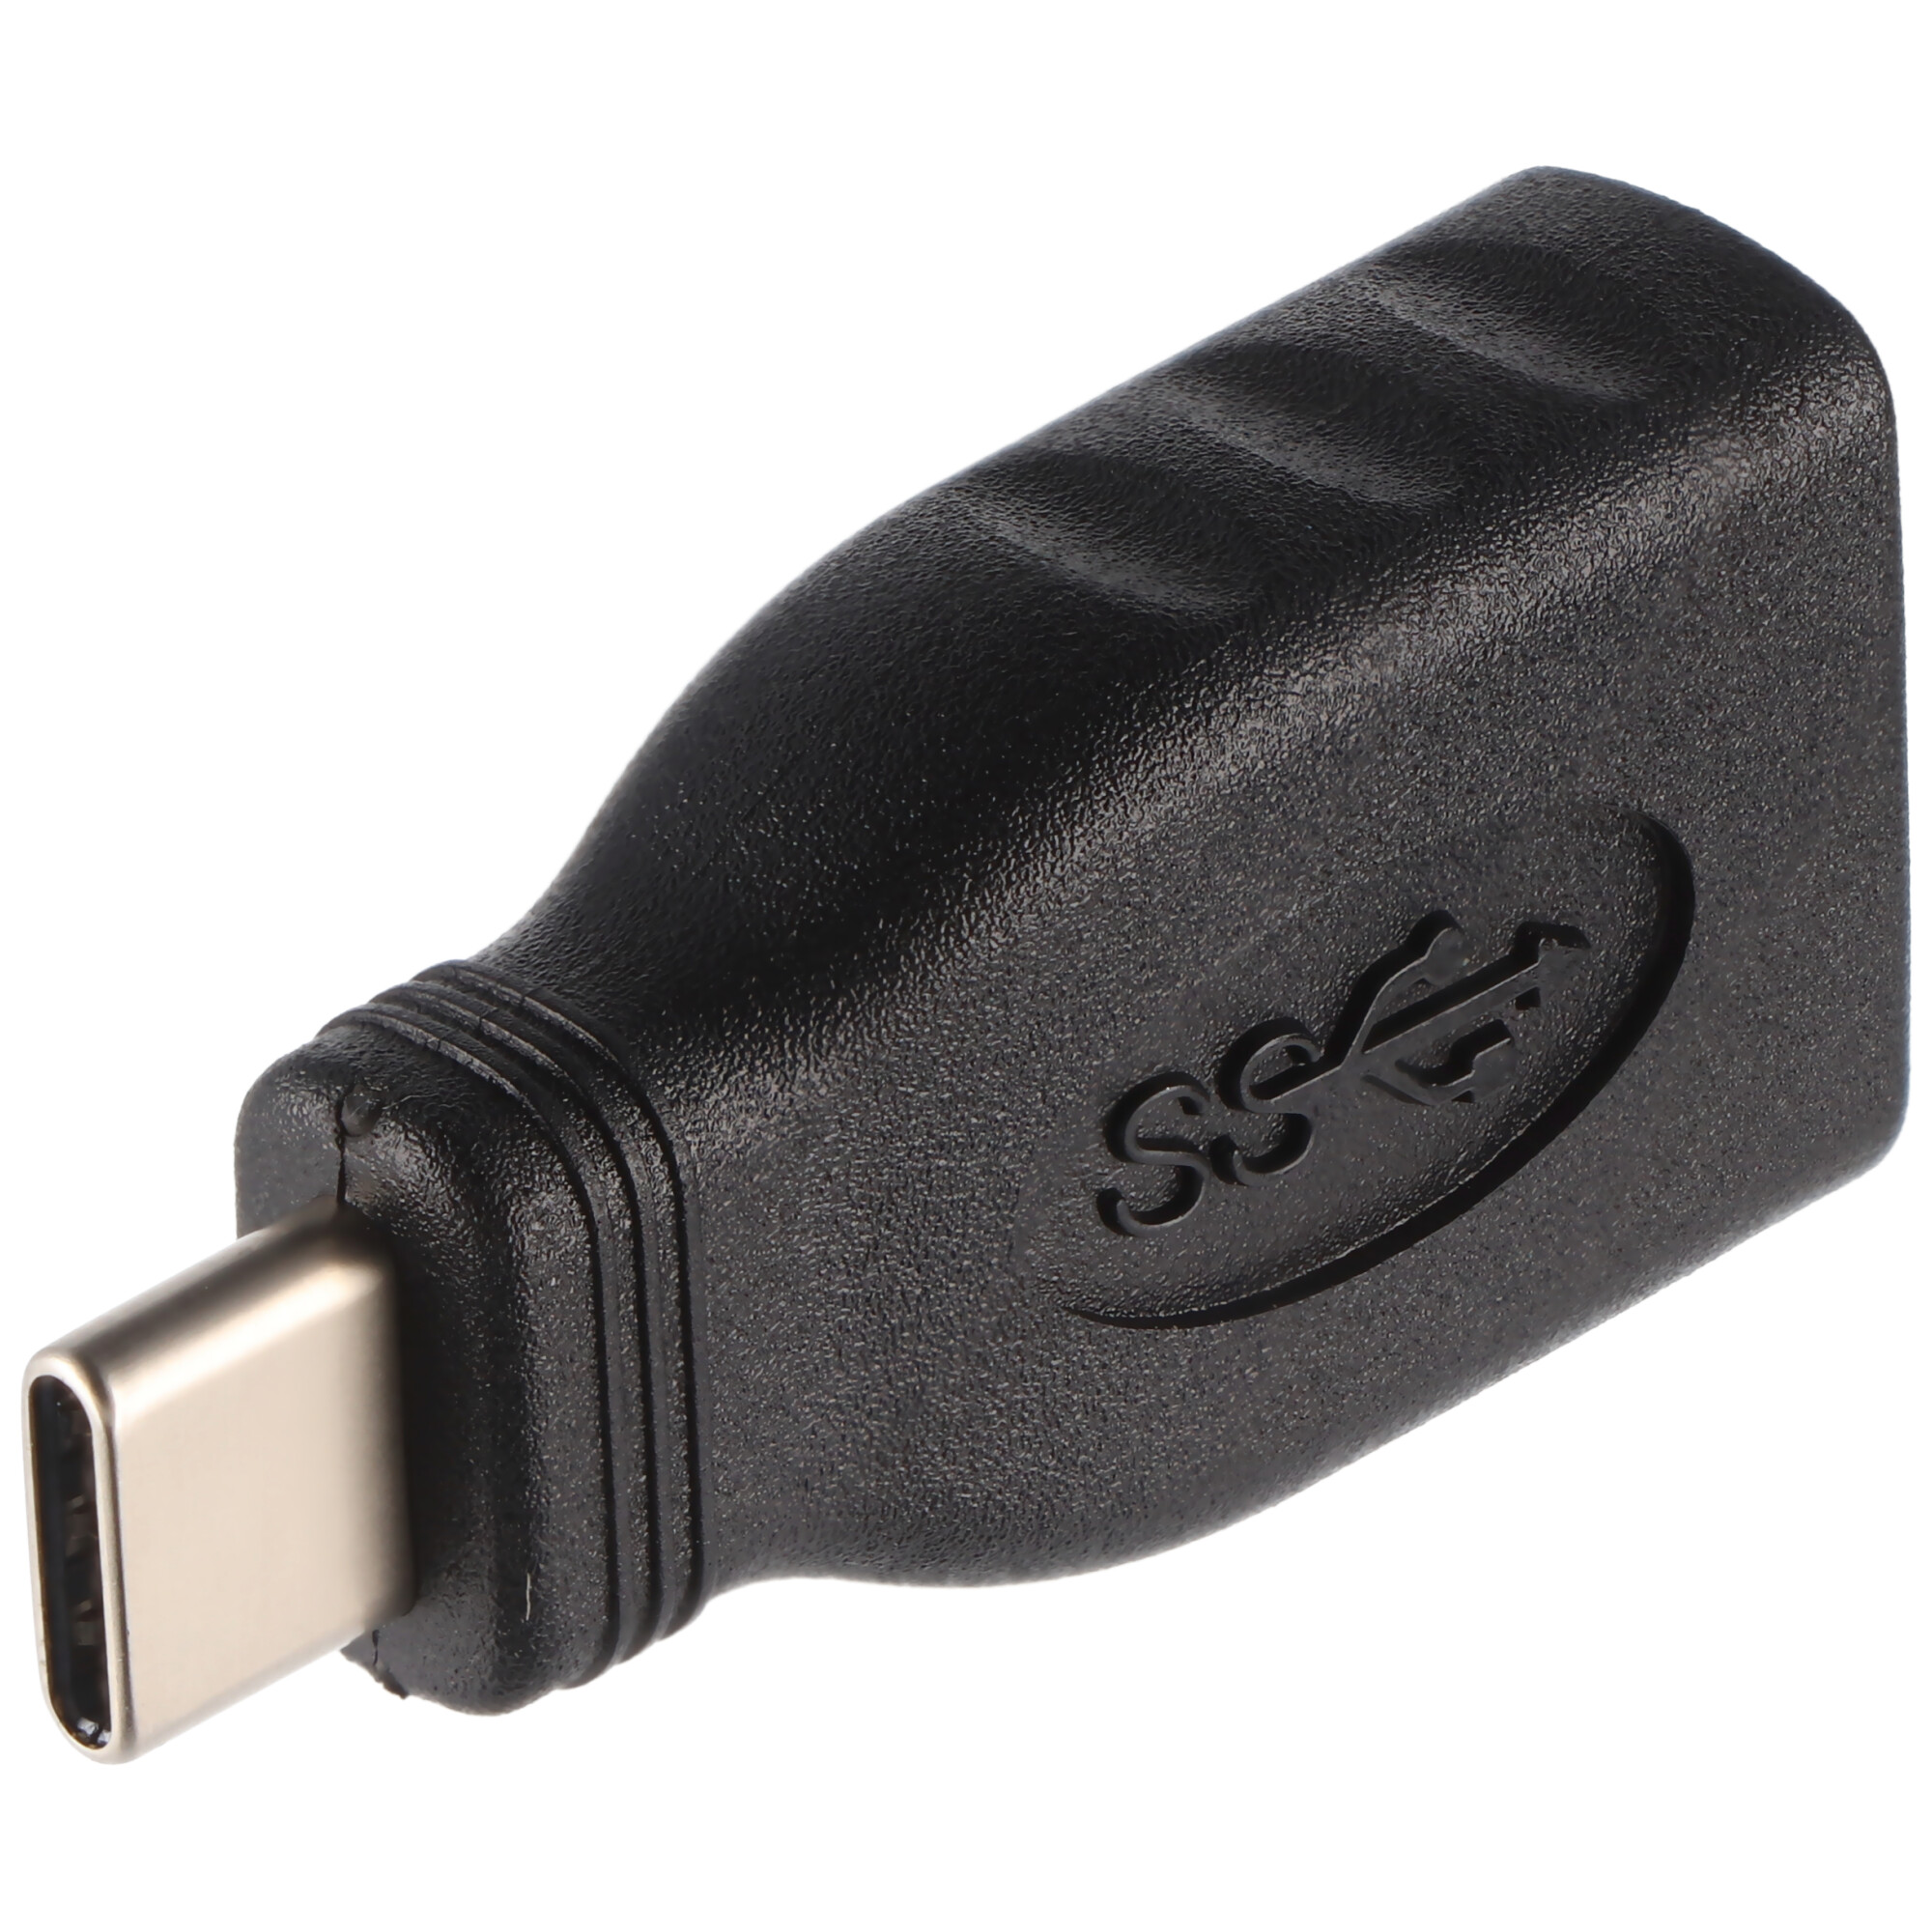 AccuCell Adapter kompatibel zu USB Type C (USB-C) Stecker auf USB-A 3.0 Buchse - OTG Support